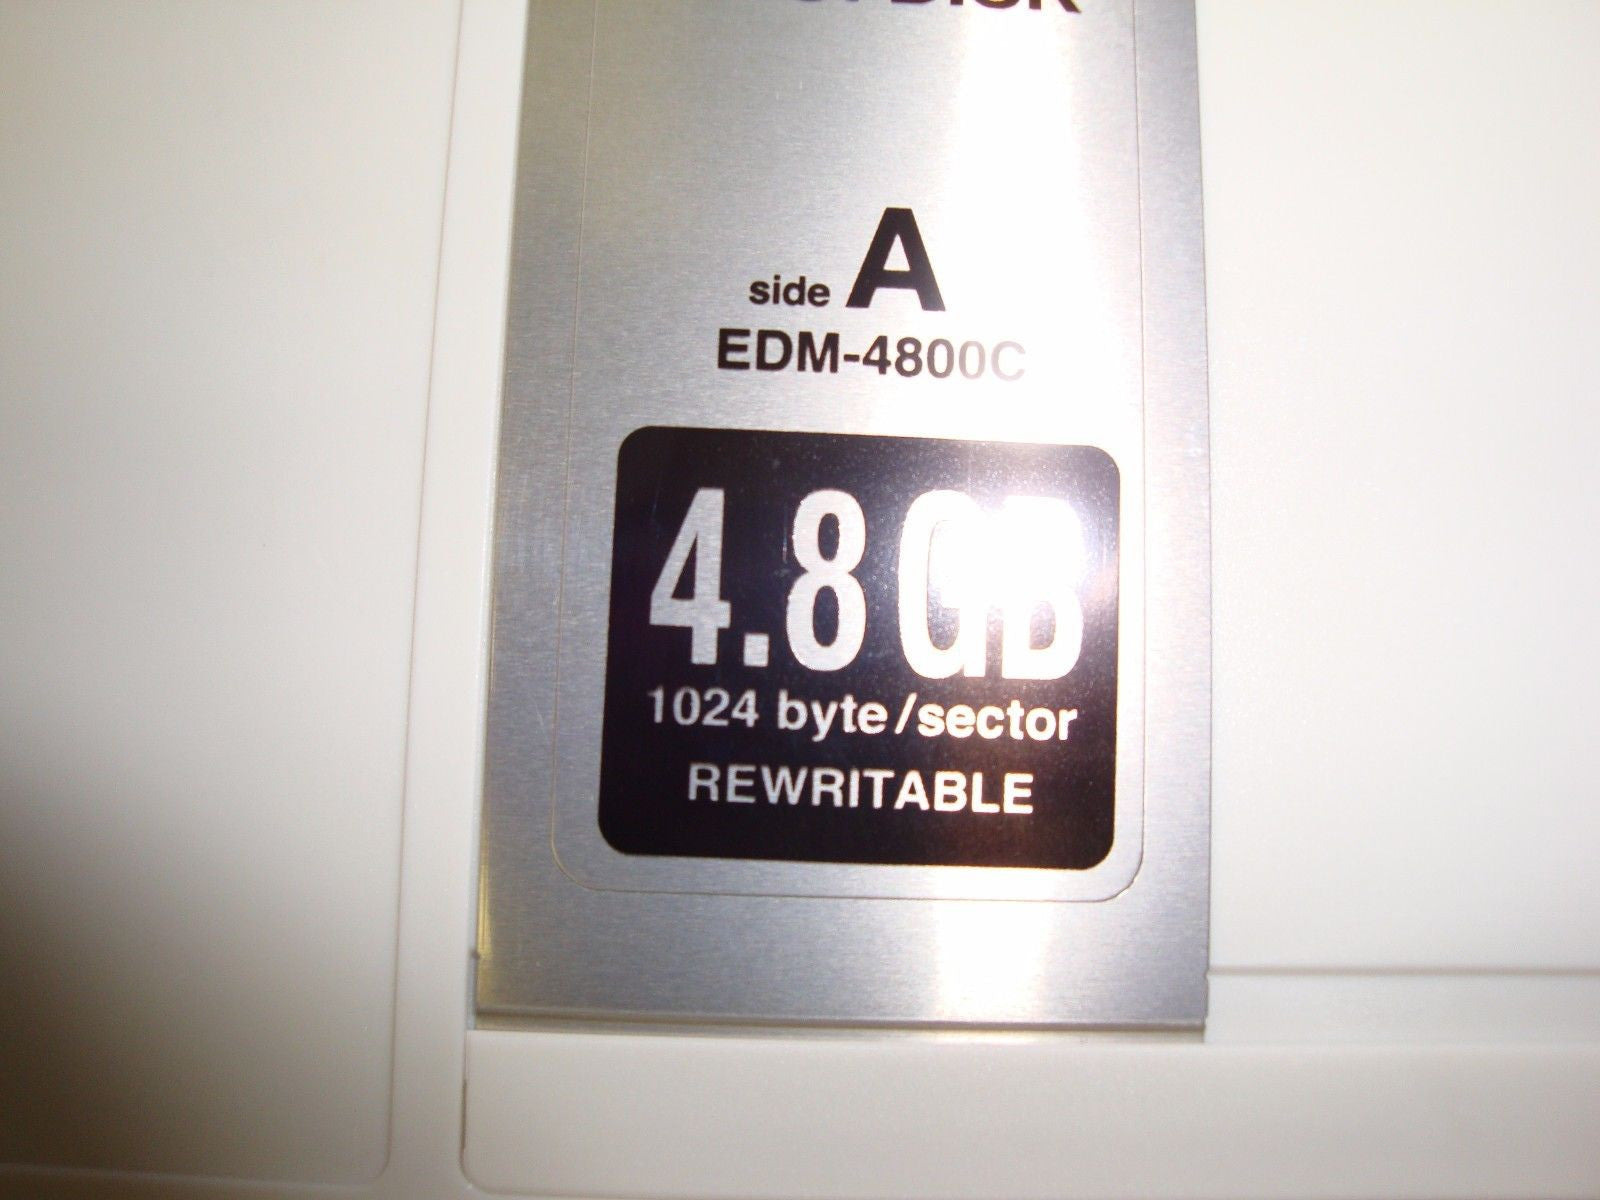 USED Sony MO Media EDM-4800C  Qty 1 Piece 4.8GB RW  EDM-4800B - Micro Technologies (yourdrives.com)